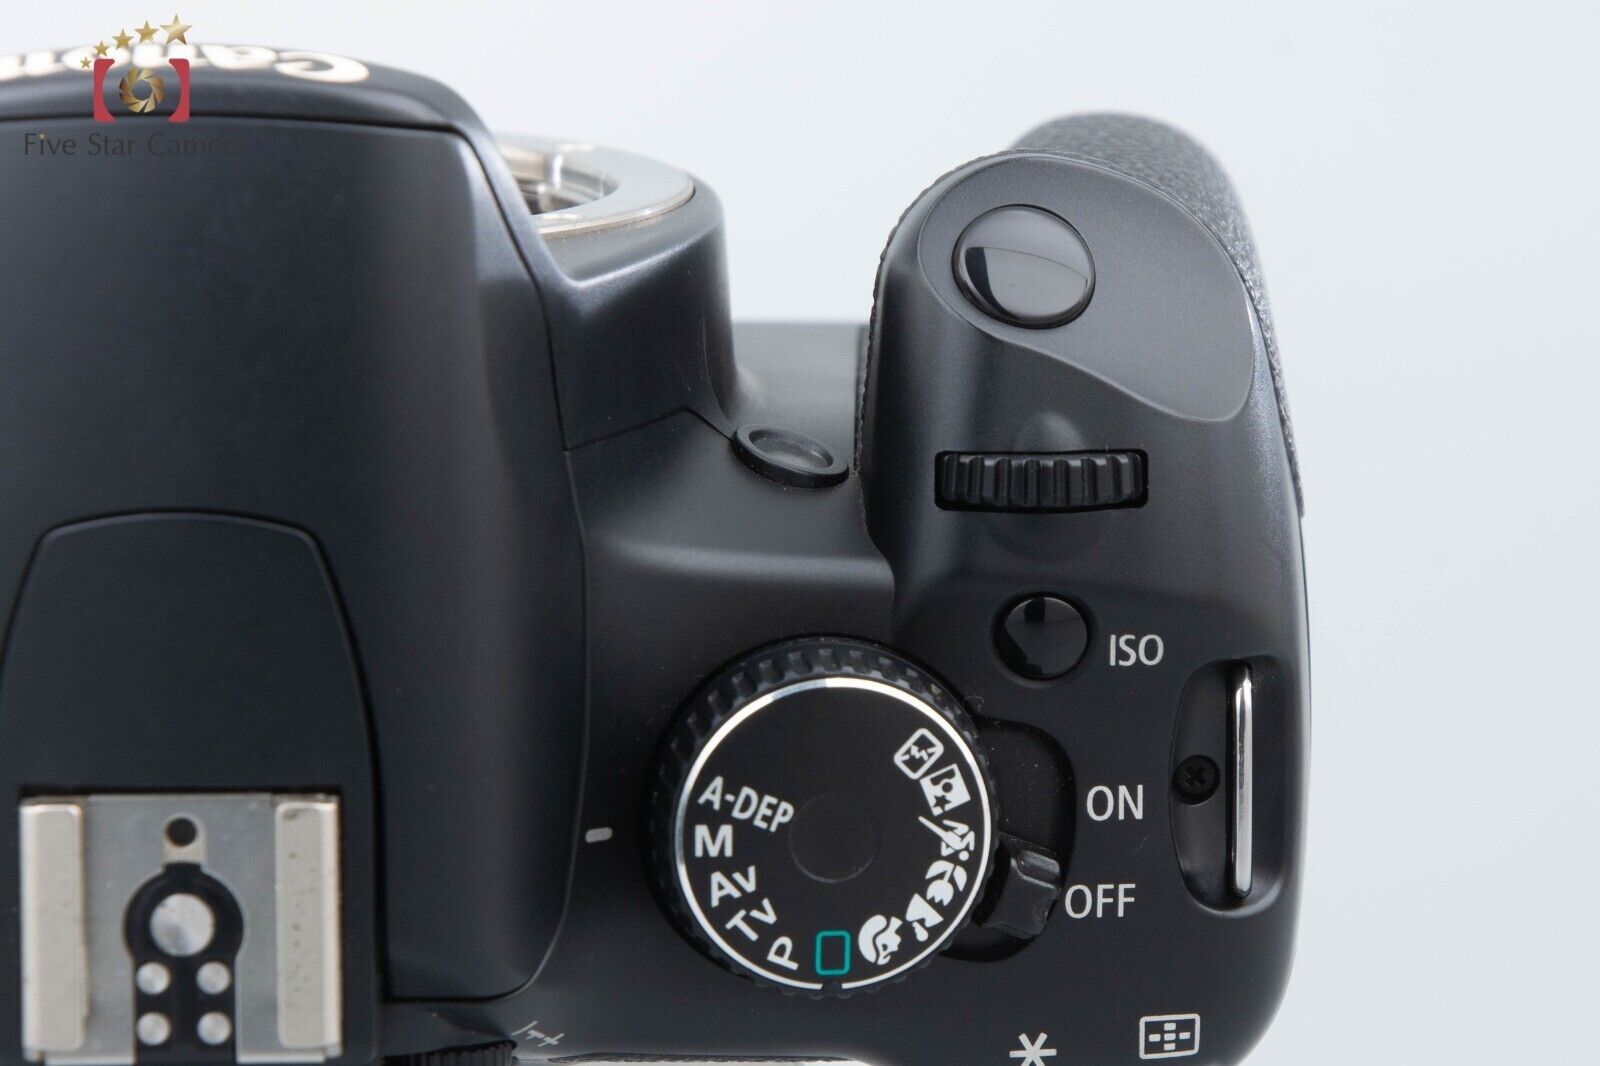 "Count 4,249" Canon EOS Kiss X2 / Digital Rebel XSi / 450D 12.2 MP 18-35 Lens